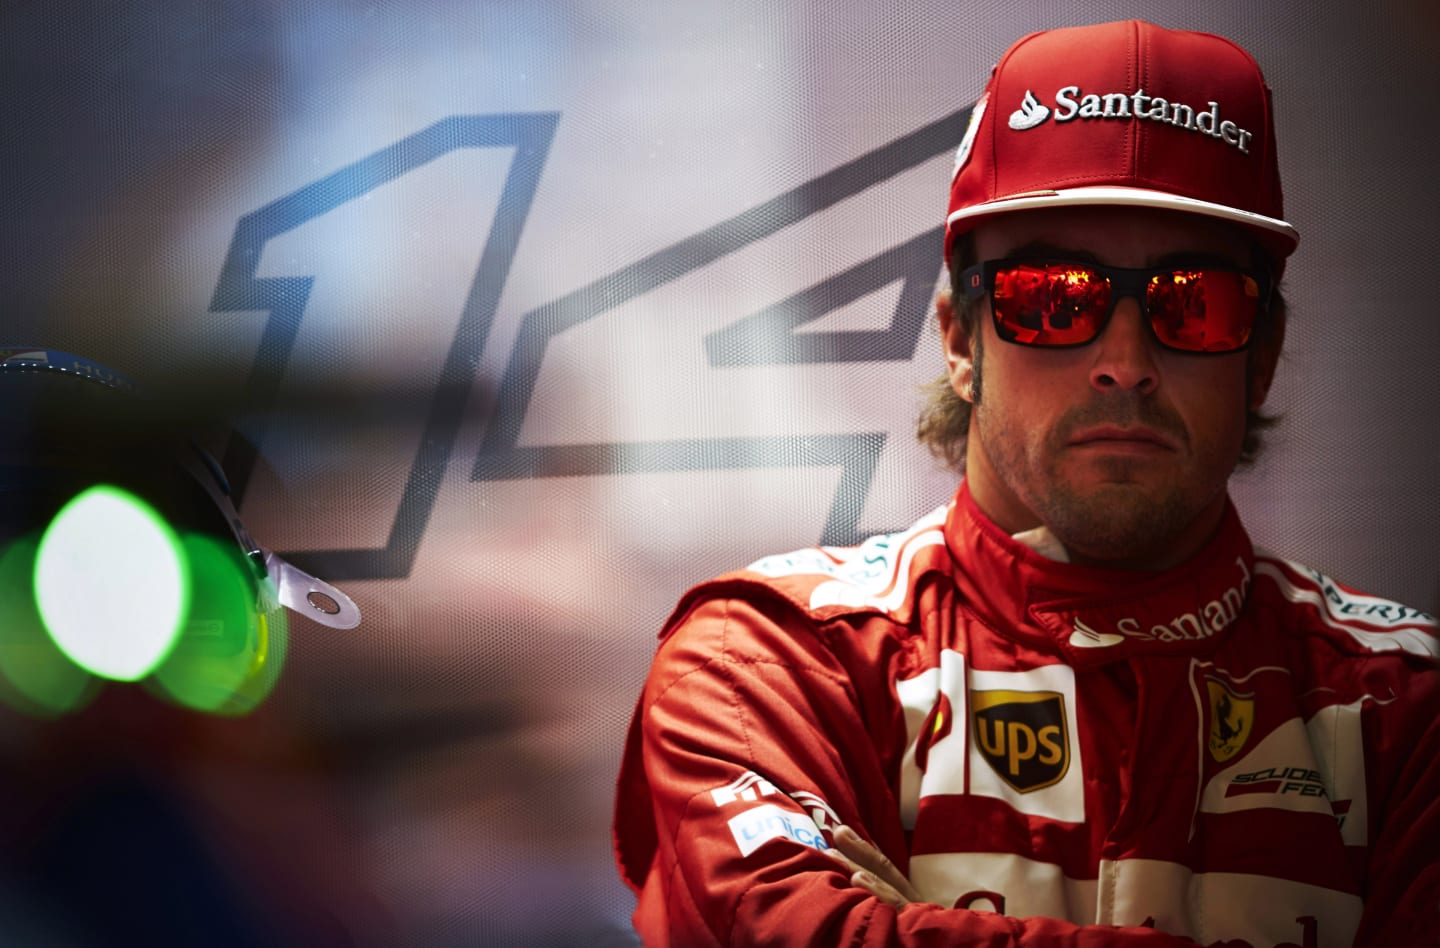 Spanish Scuderia Ferrari Formula One racing team racing driver Fernando Alonso sitting in the